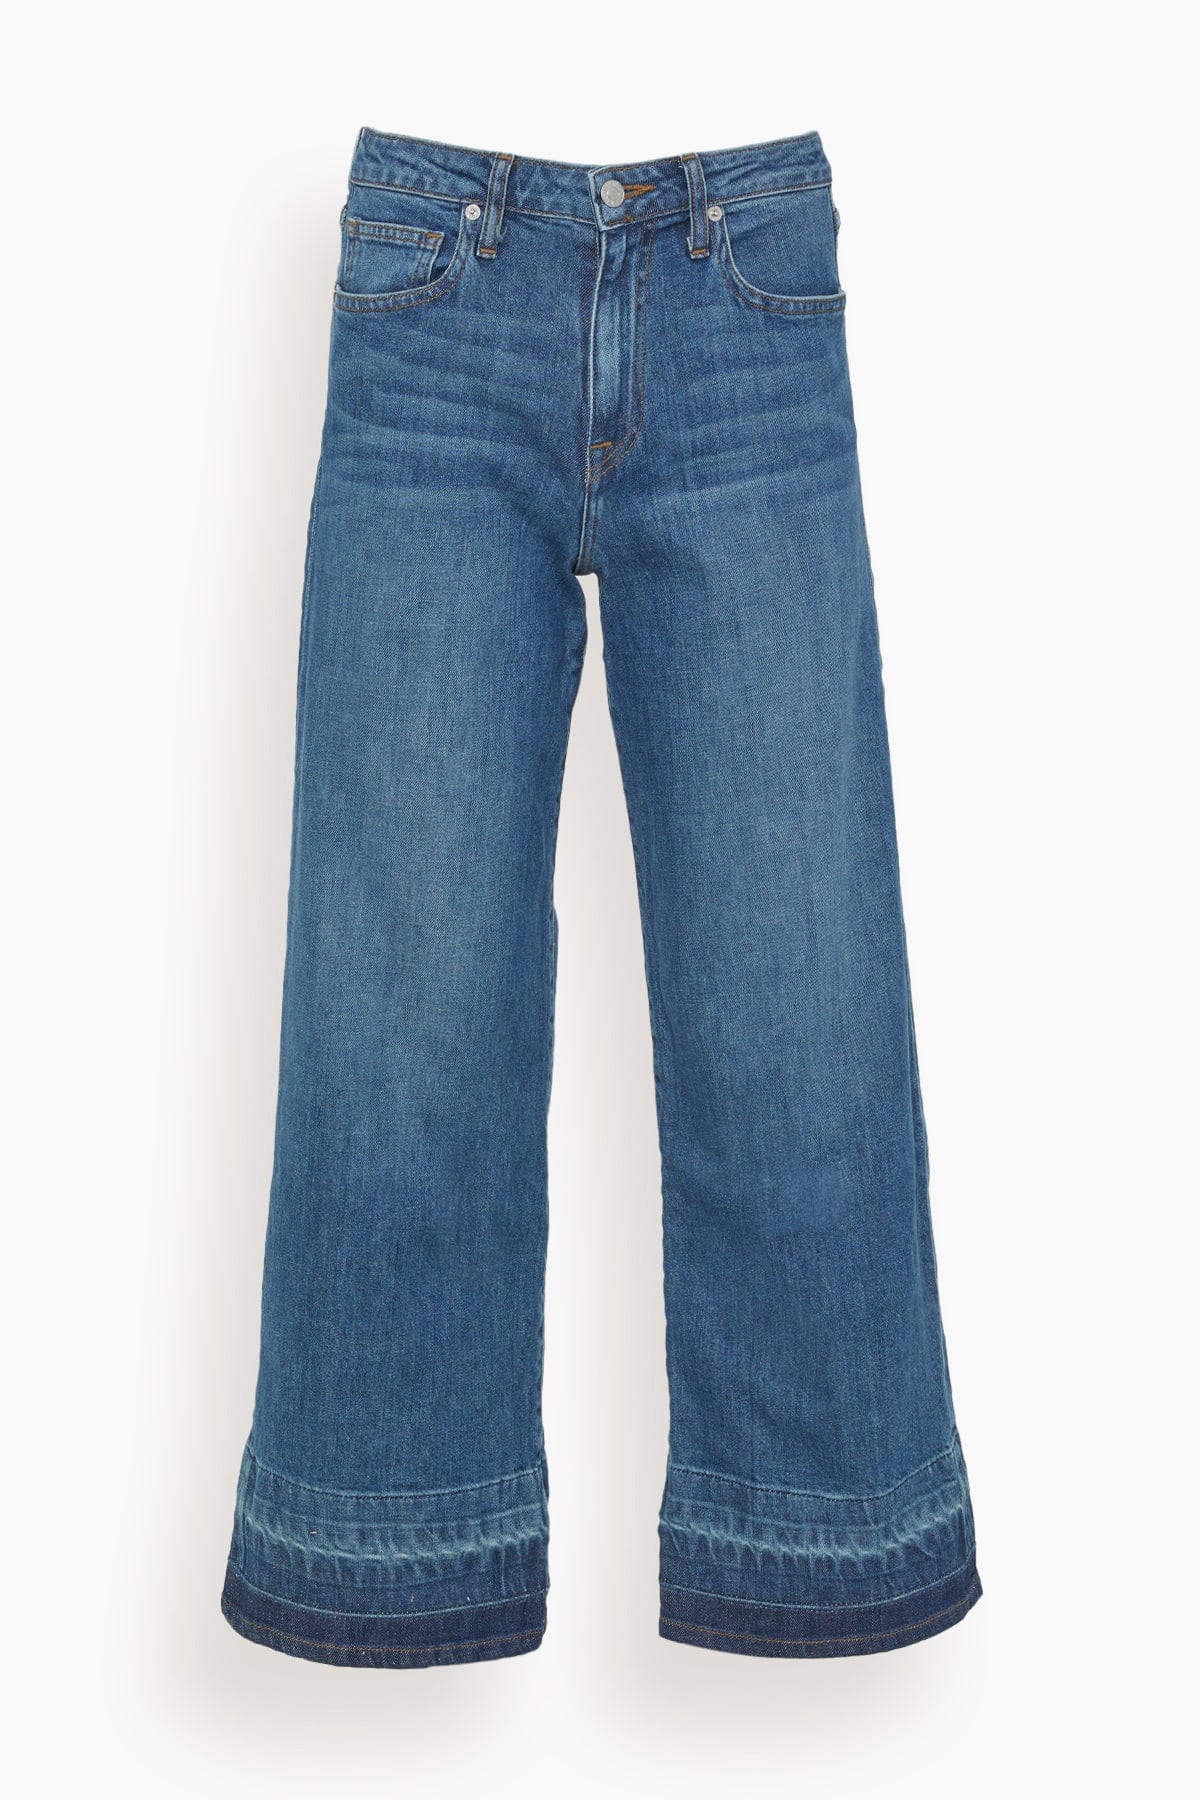 Simkhai Jude Mid Rise Crop Wide Leg Jean in Coronado - Blue - Size: 27